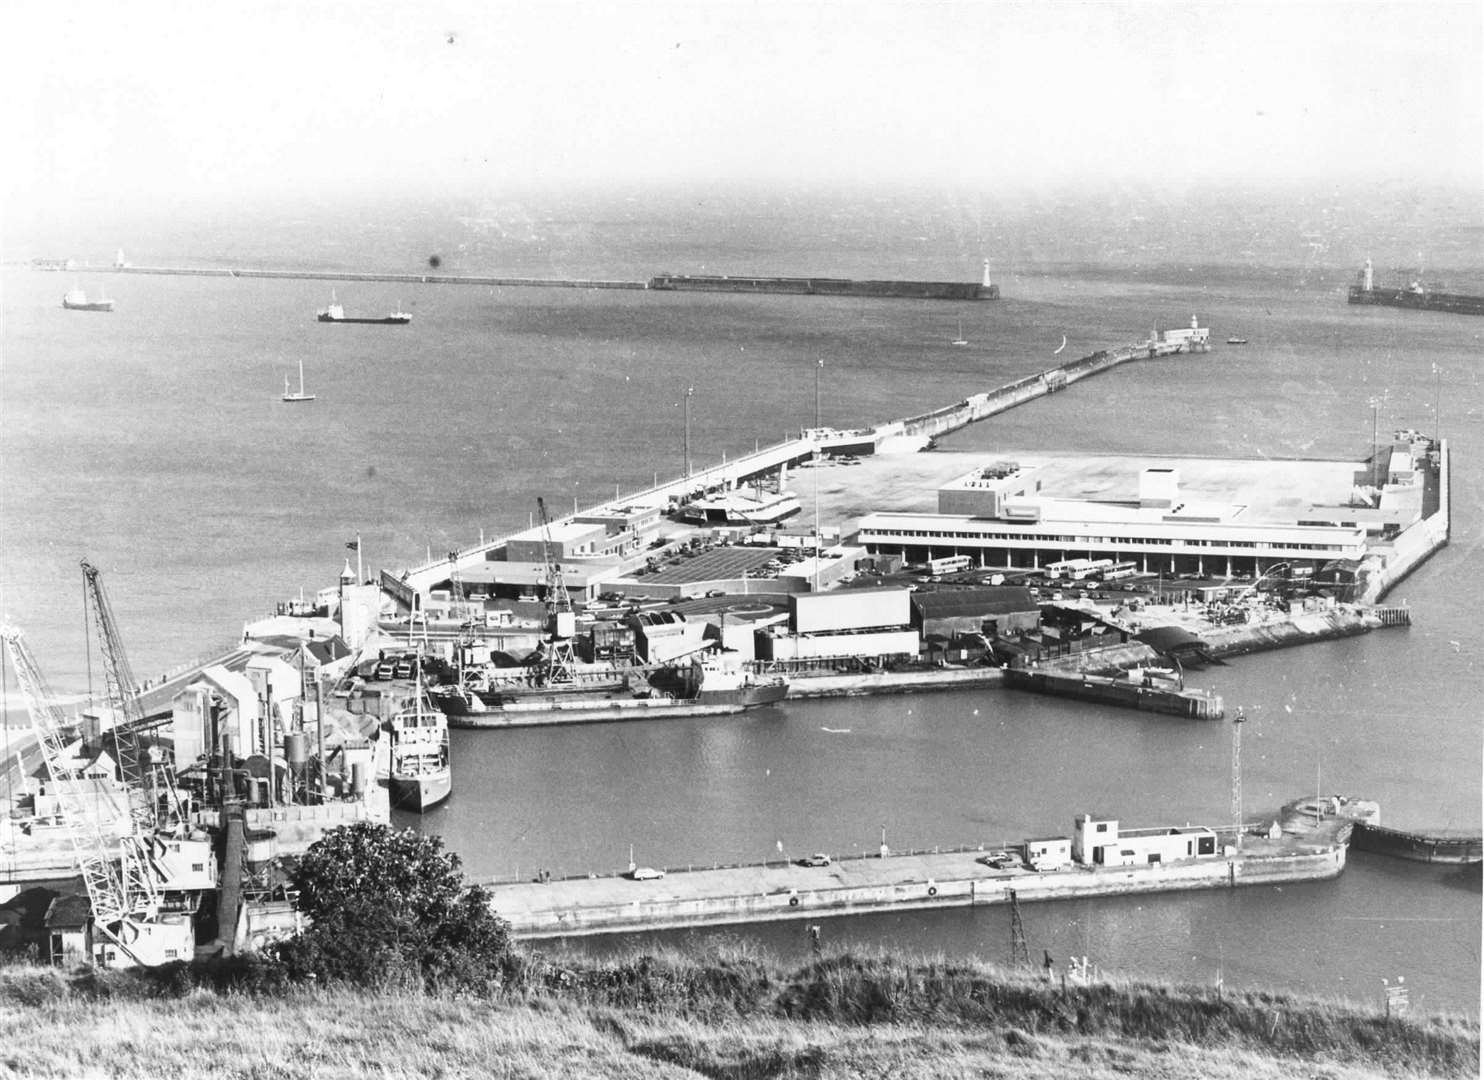 The hovercraft base in Dover's Western Docks, pictured in November 1978